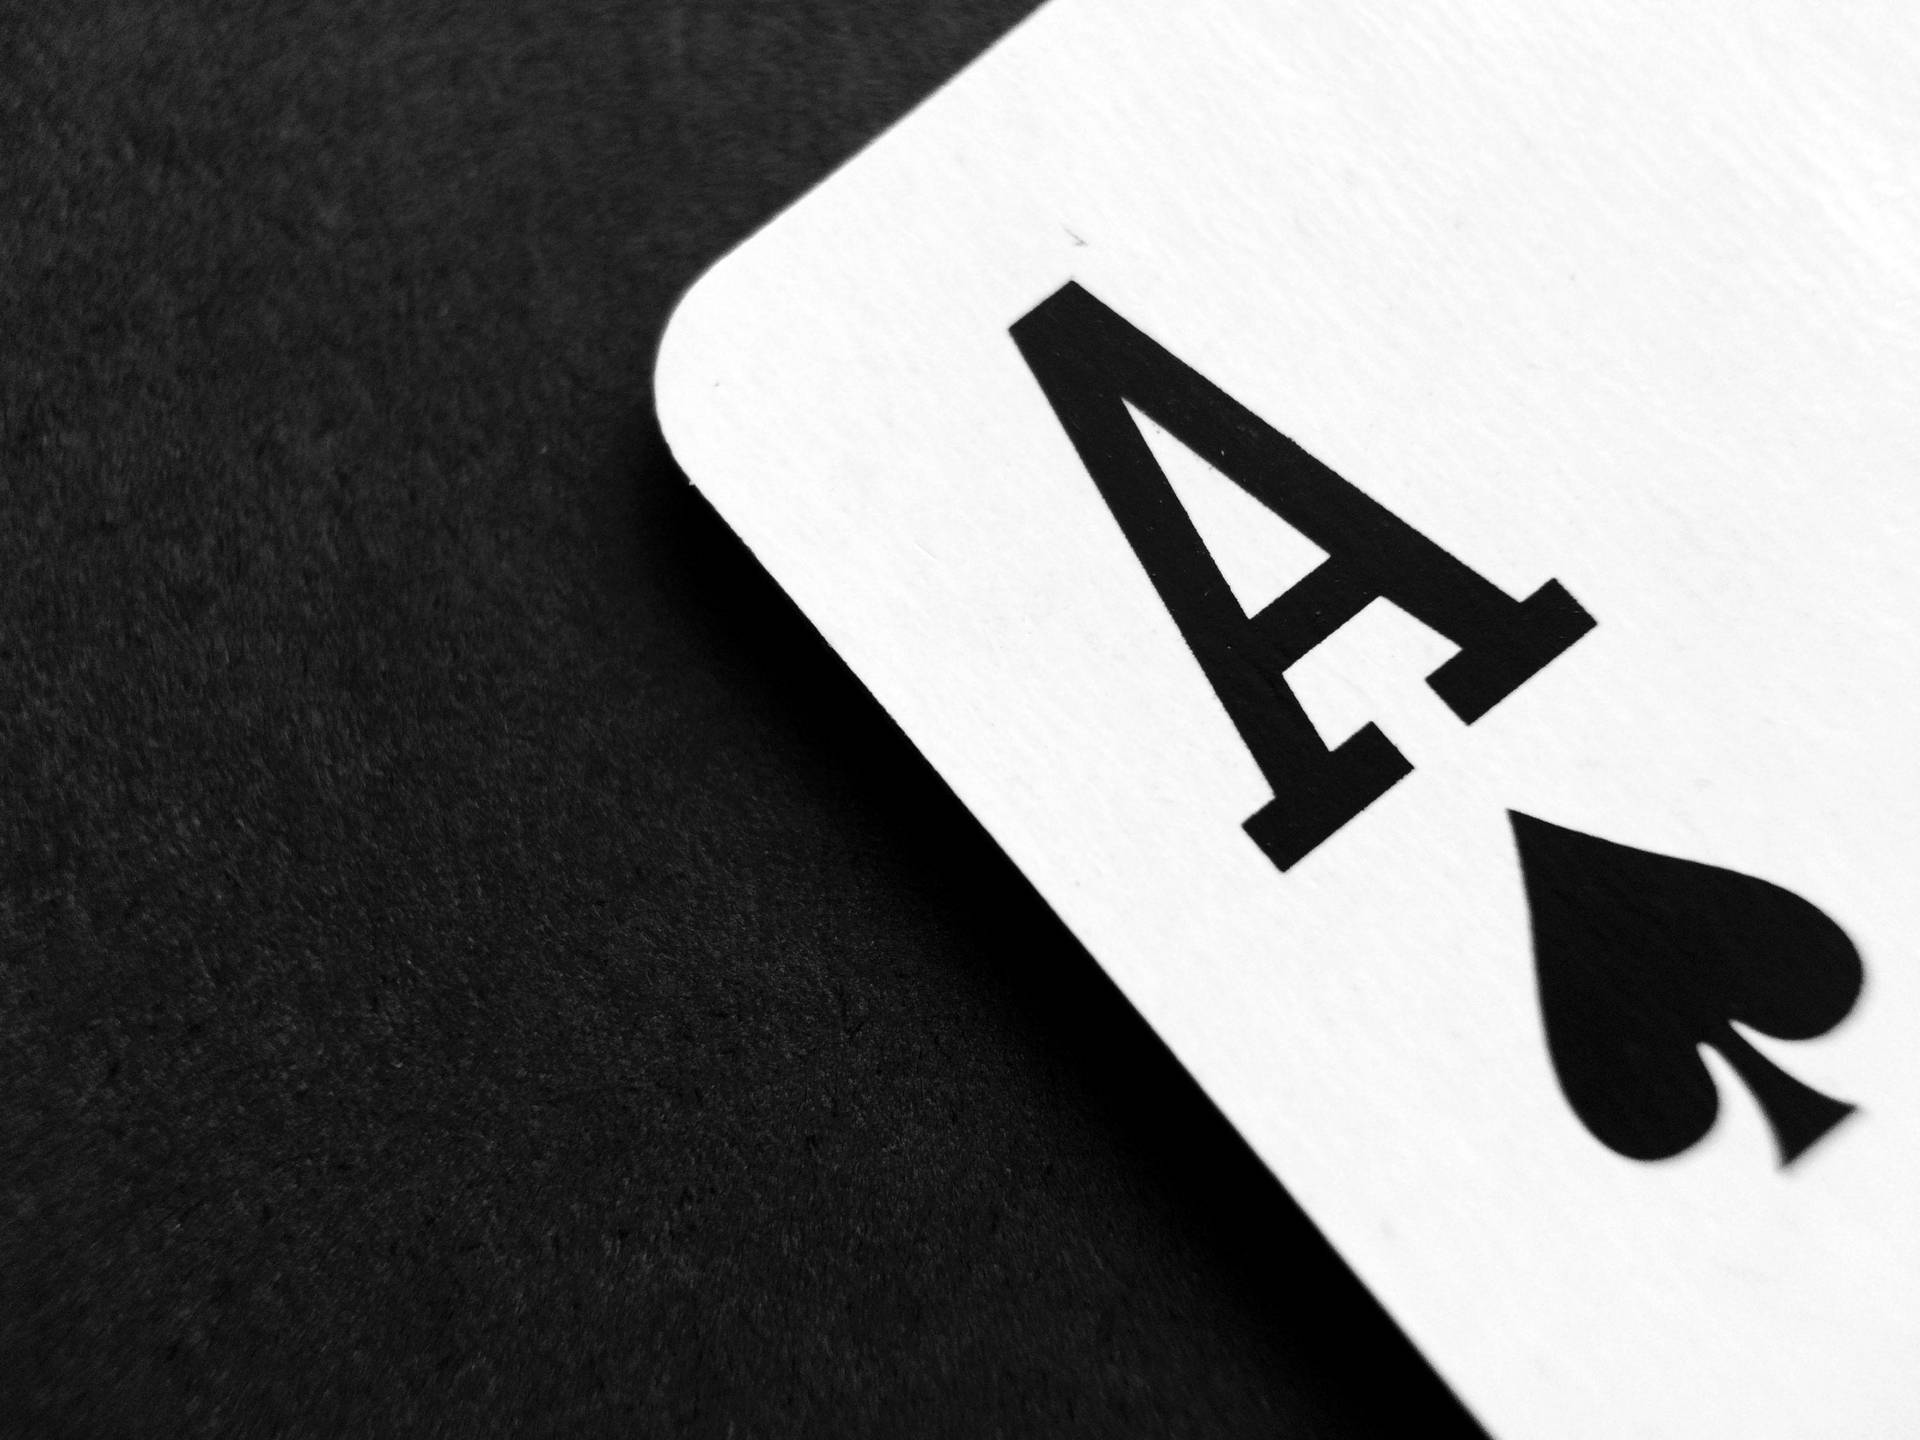 Ace Card - En Elite Medlemskab For Uovertruffen privilegier Wallpaper